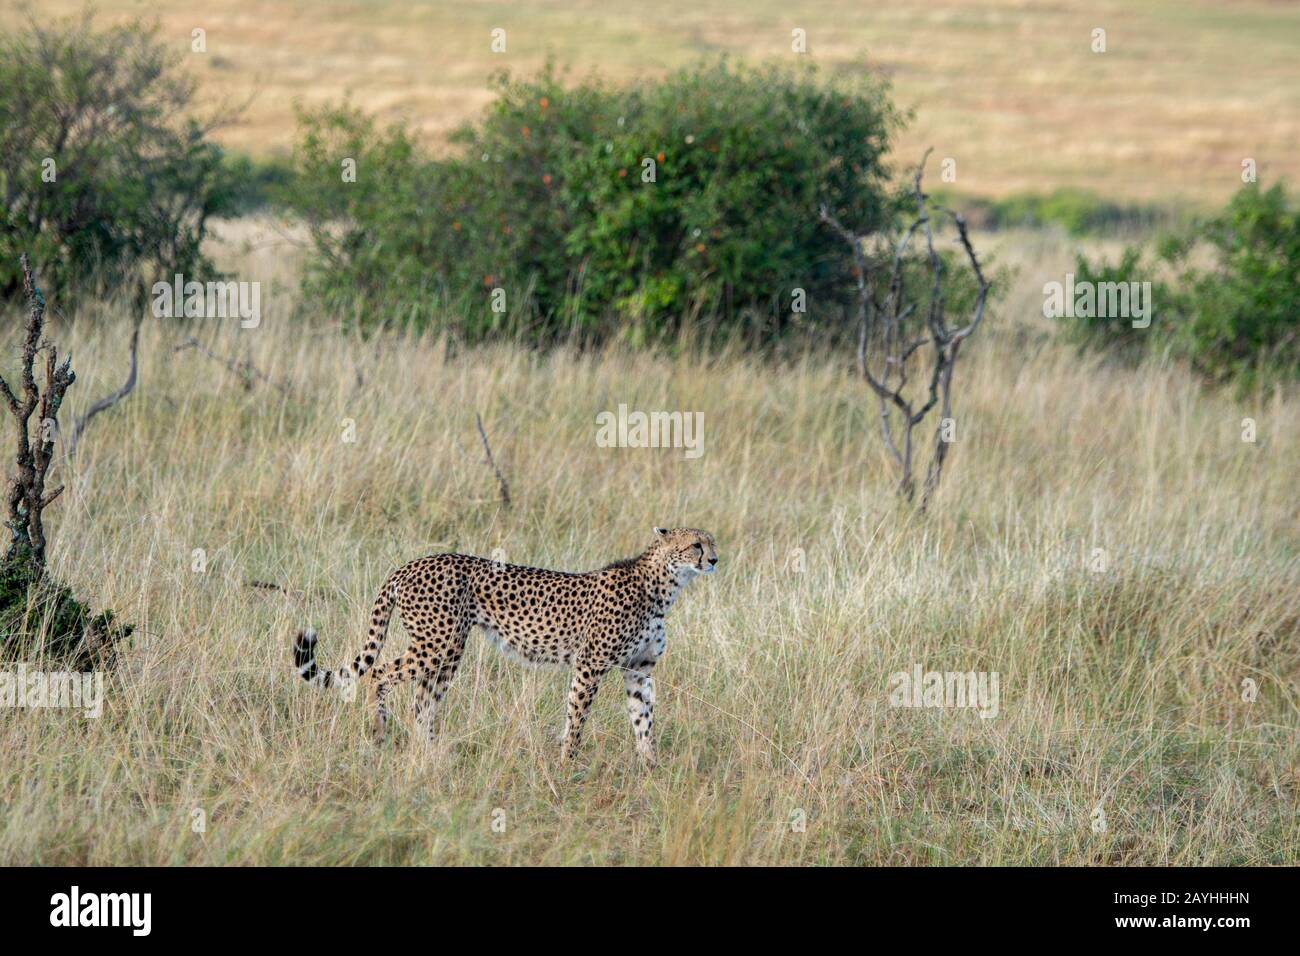 A Cheetah (Acinonyx jubatus) is hunting in the grassland of the Masai Mara National Reserve in Kenya. Stock Photo